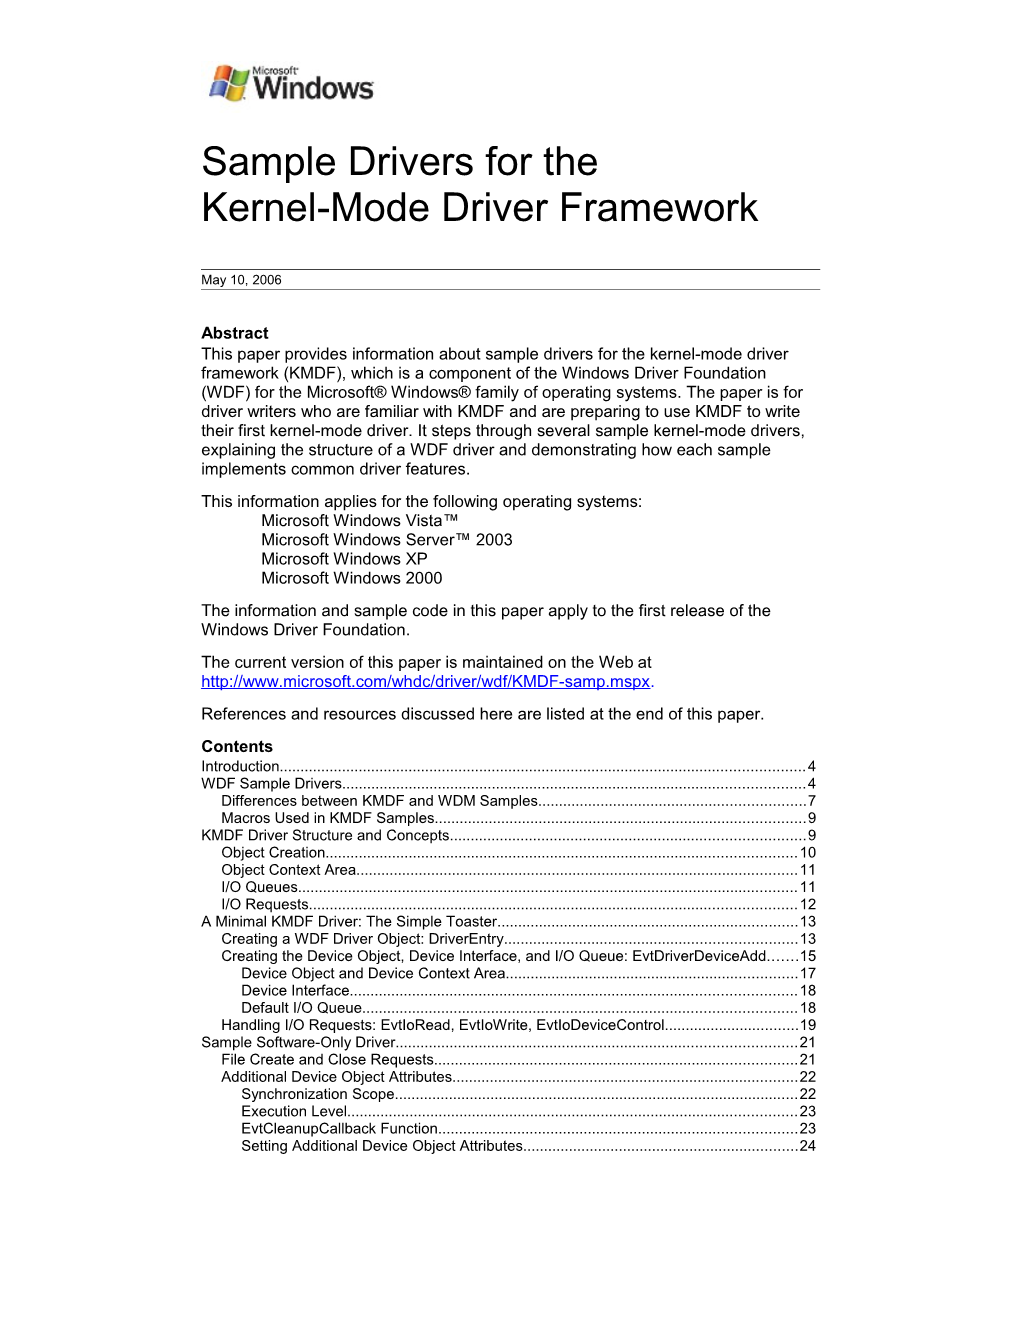 Sample Drivers For The Kernel-Mode Driver Framework